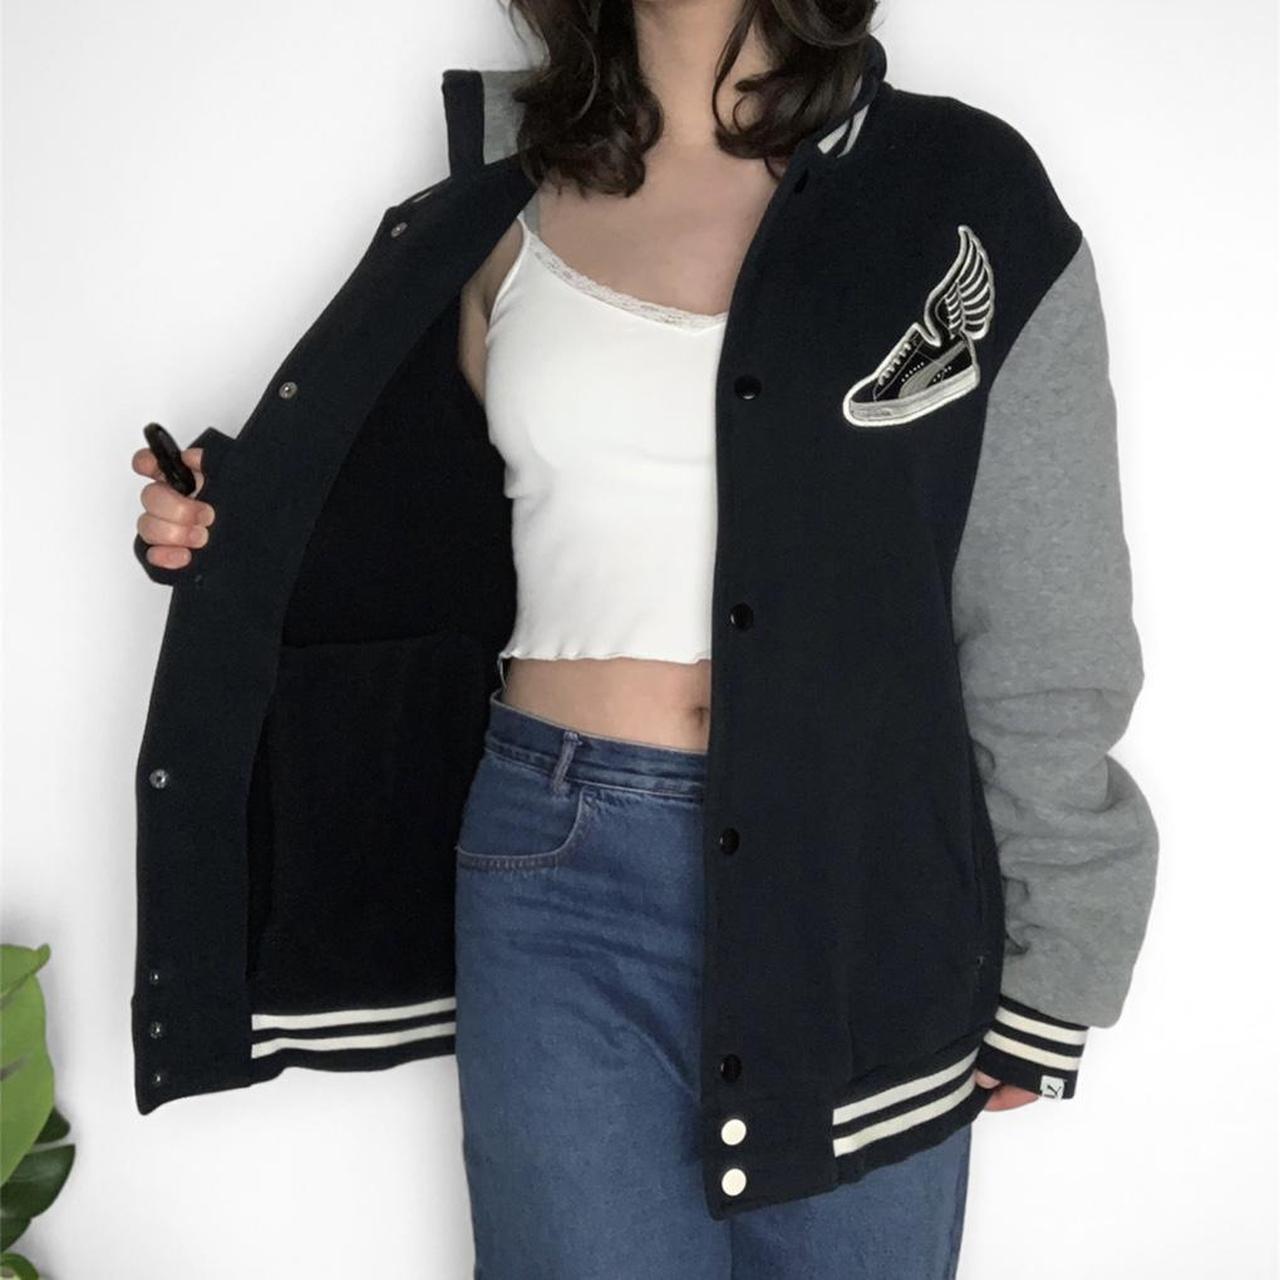 Vintage 90’s Puma streetwear varsity/letterman style bomber jacket